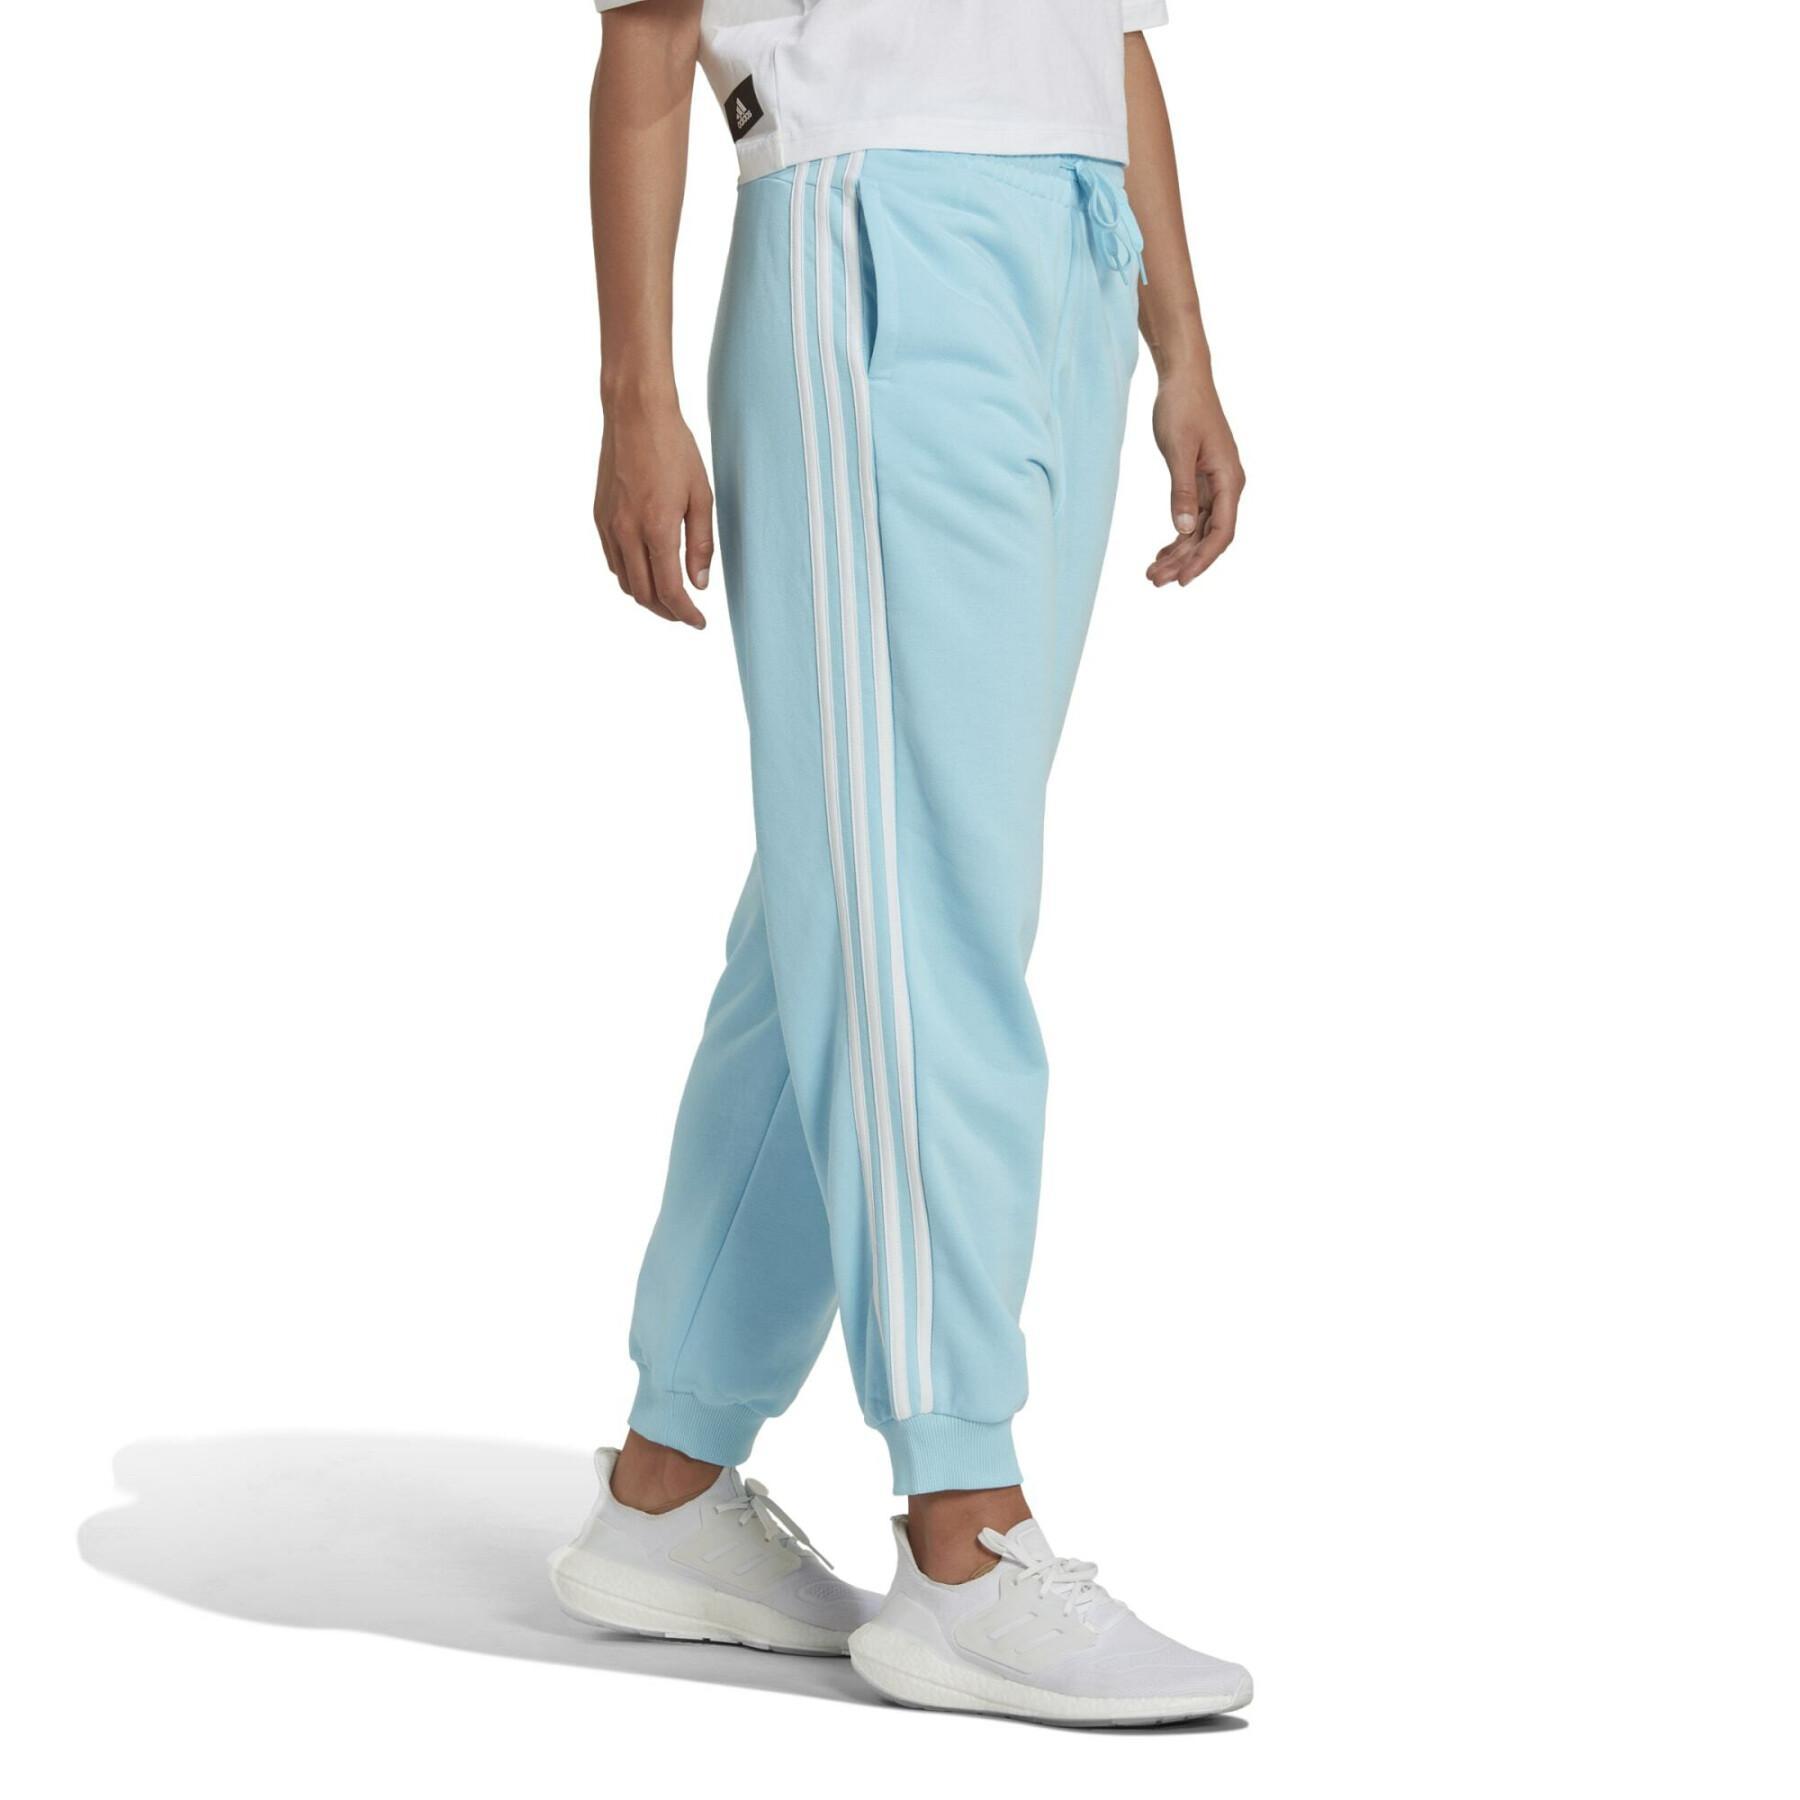 Women's 3-stripes jogging suit adidas Essentials Studio Lounge